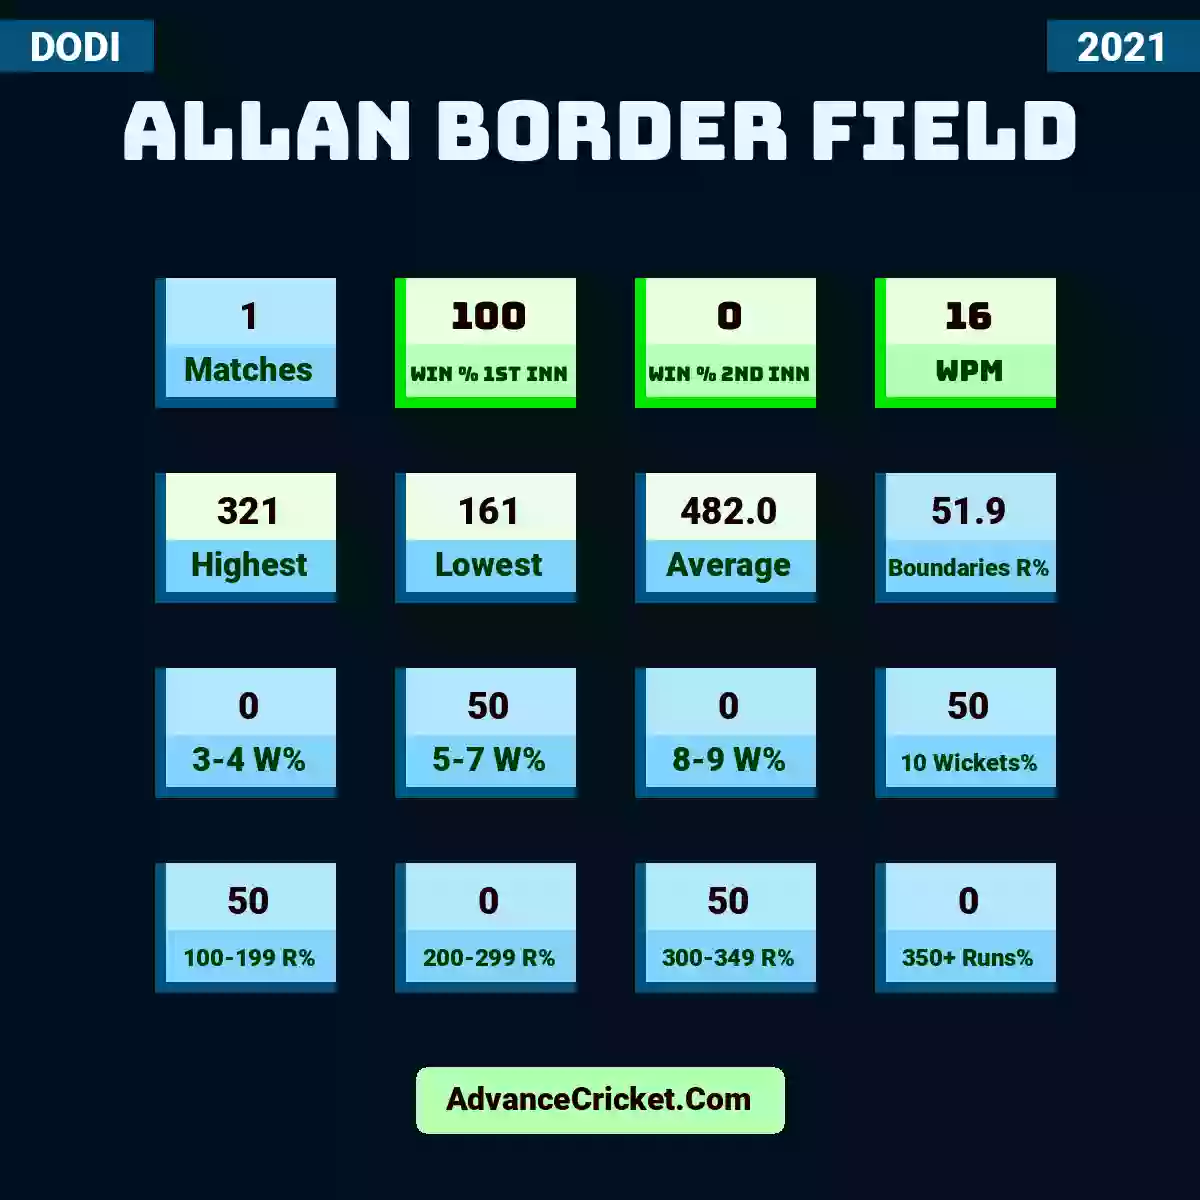 Image showing Allan Border Field with Matches: 1, Win % 1st Inn: 100, Win % 2nd Inn: 0, WPM: 16, Highest: 321, Lowest: 161, Average: 482.0, Boundaries R%: 51.9, 3-4 W%: 0, 5-7 W%: 50, 8-9 W%: 0, 10 Wickets%: 50, 100-199 R%: 50, 200-299 R%: 0, 300-349 R%: 50, 350+ Runs%: 0.